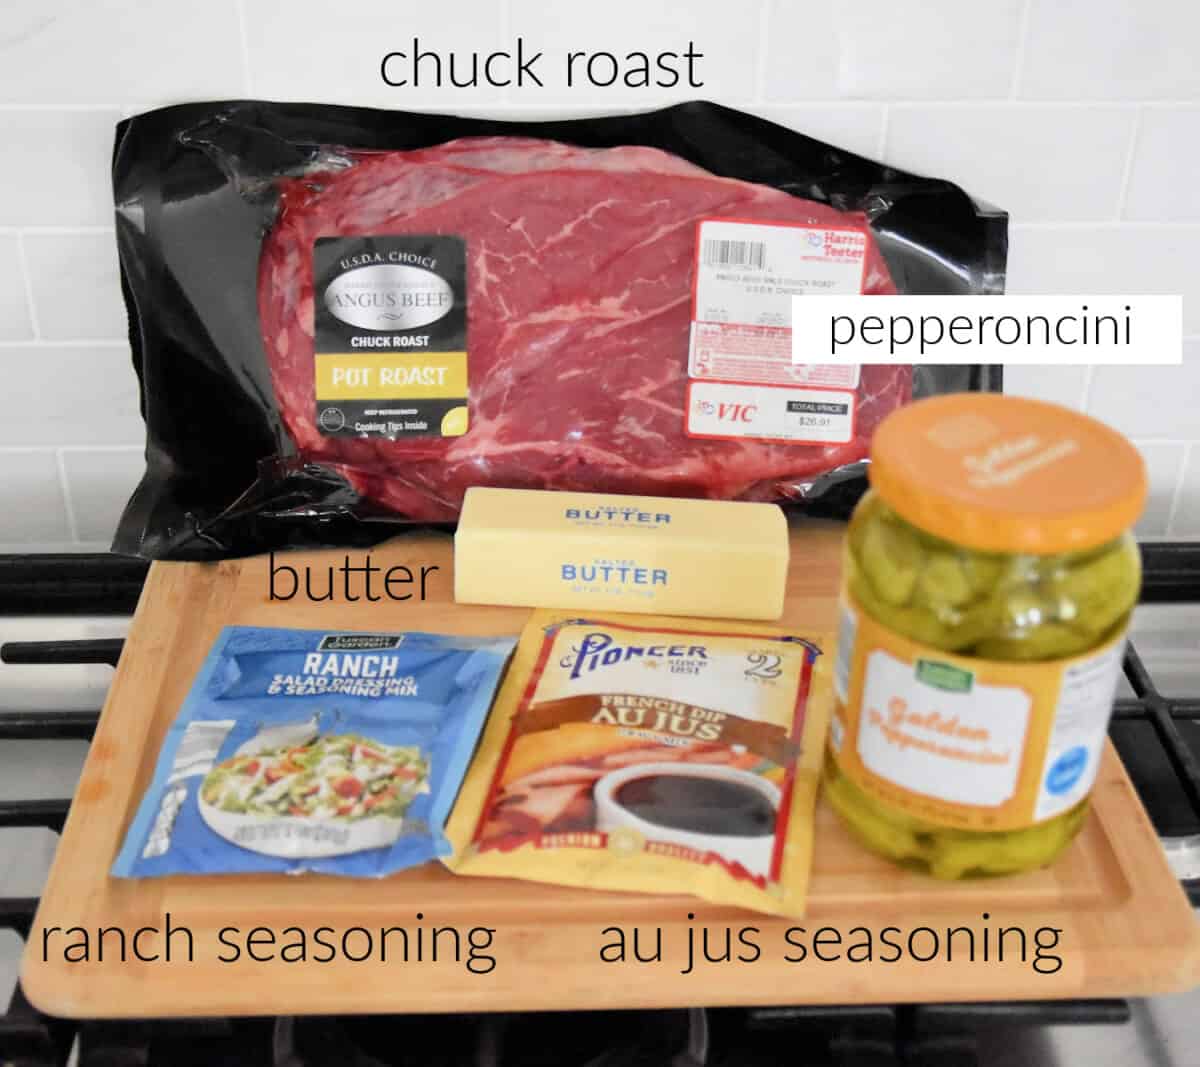 roast, pepperoncini, butter, ranch seasoning and au ju seasoning